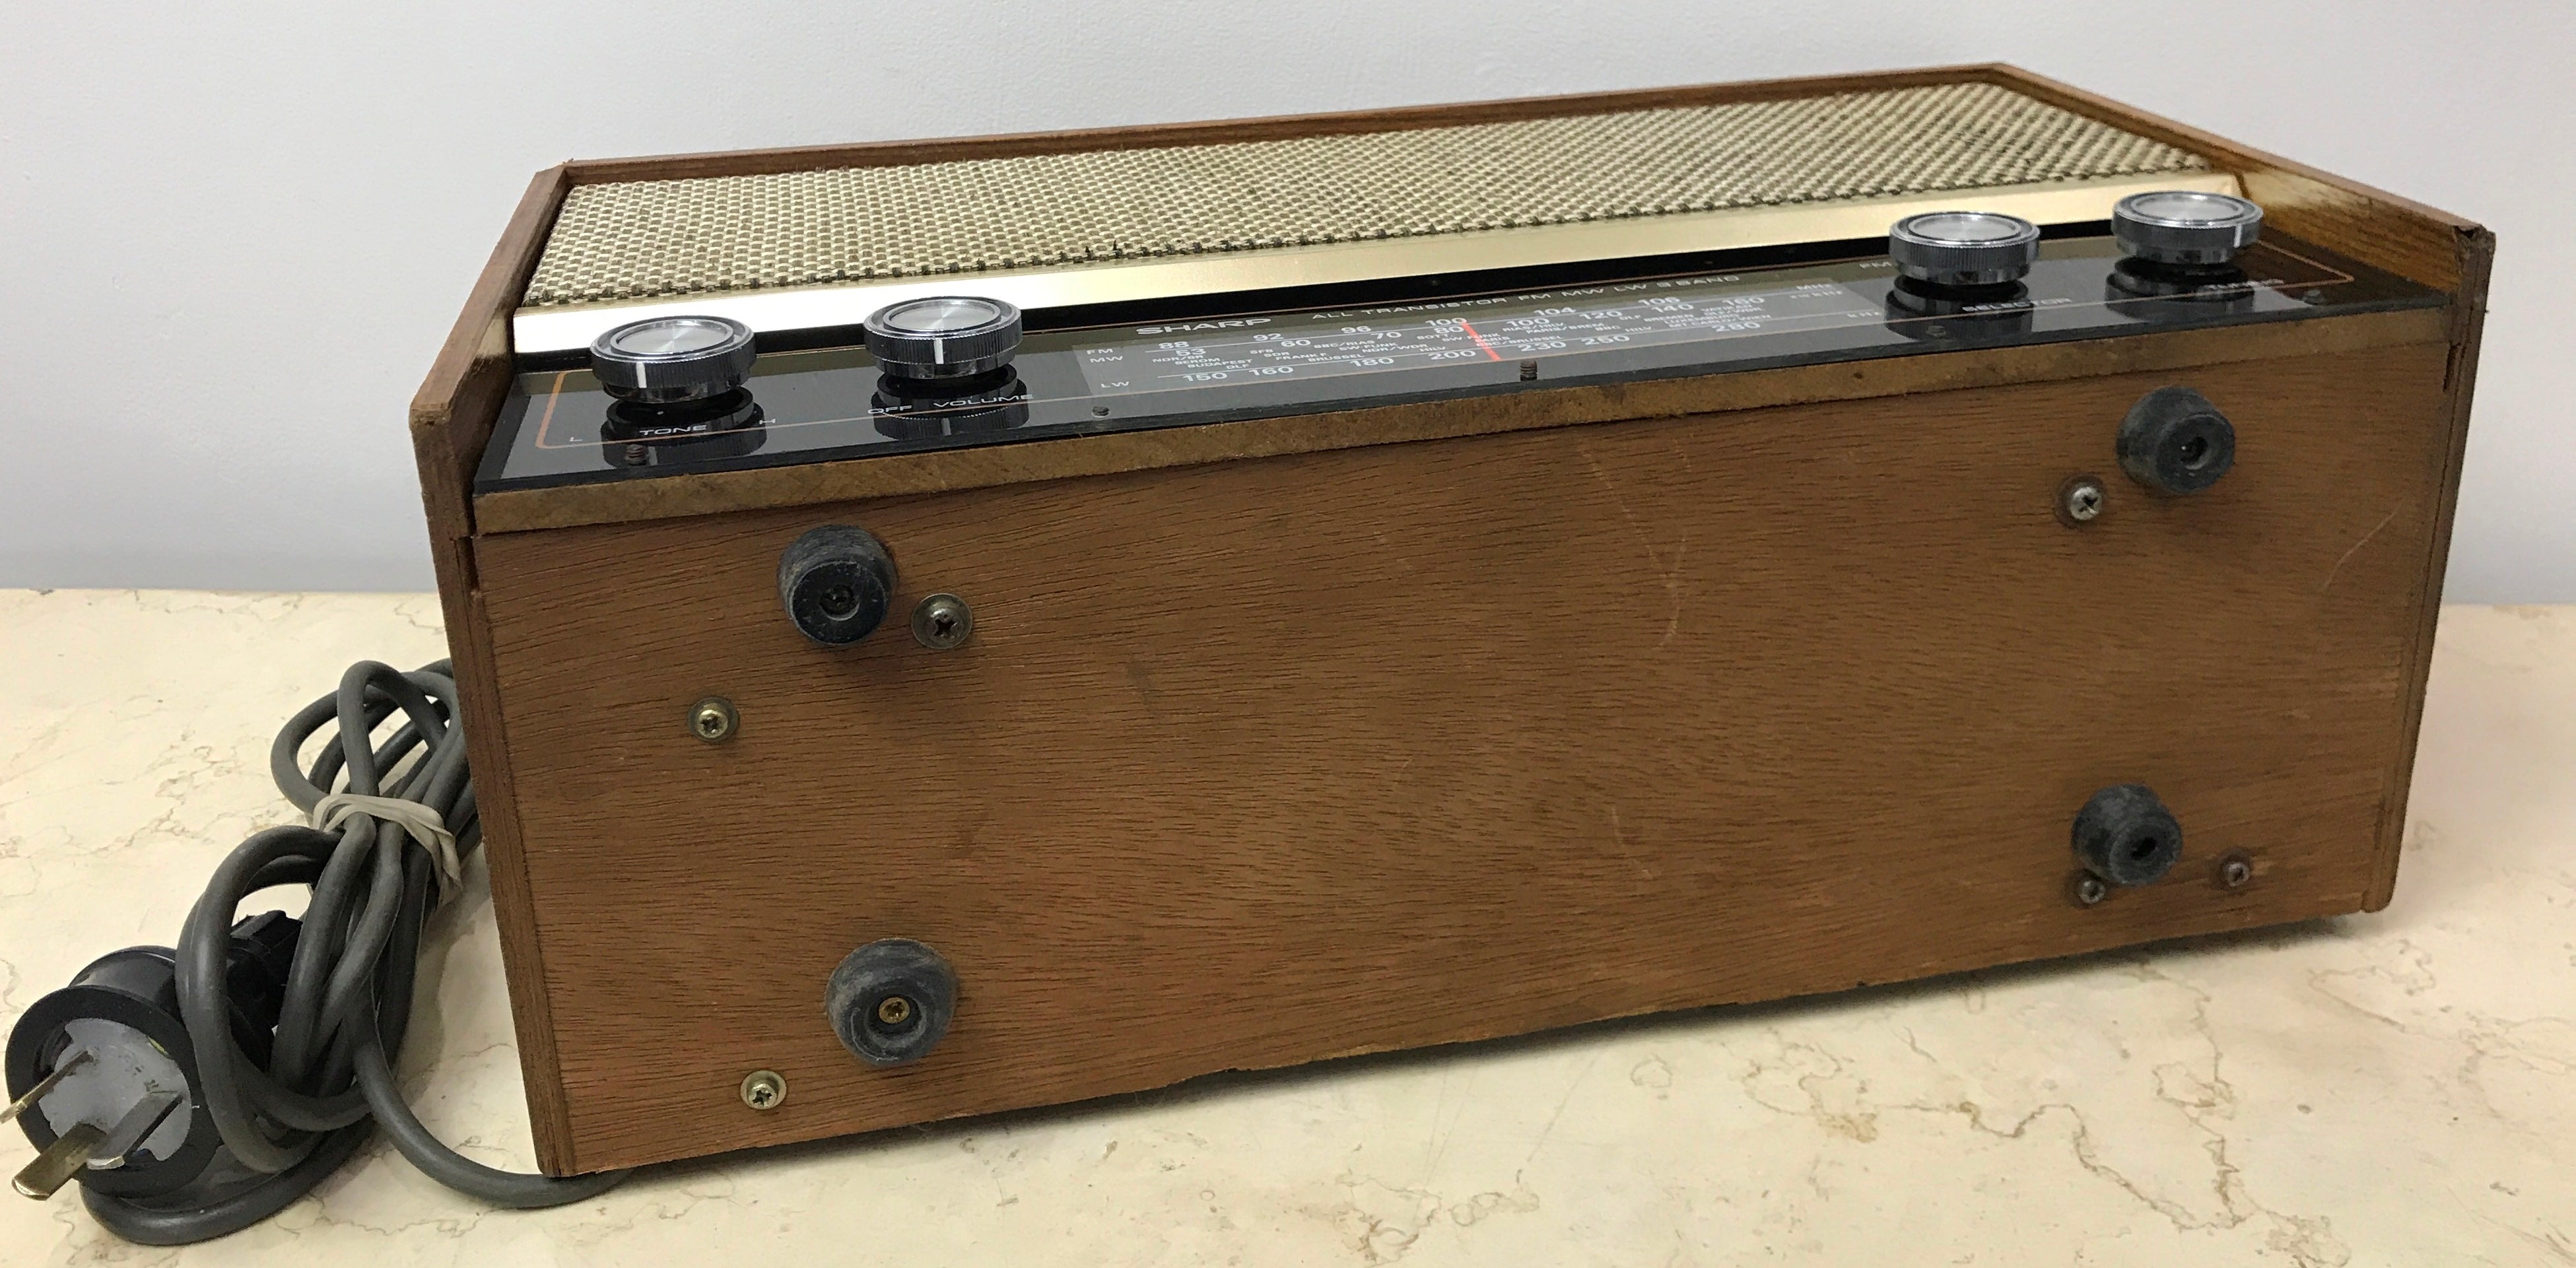 Vintage SHARP 3 Band Transistor Radio | eXibit collection